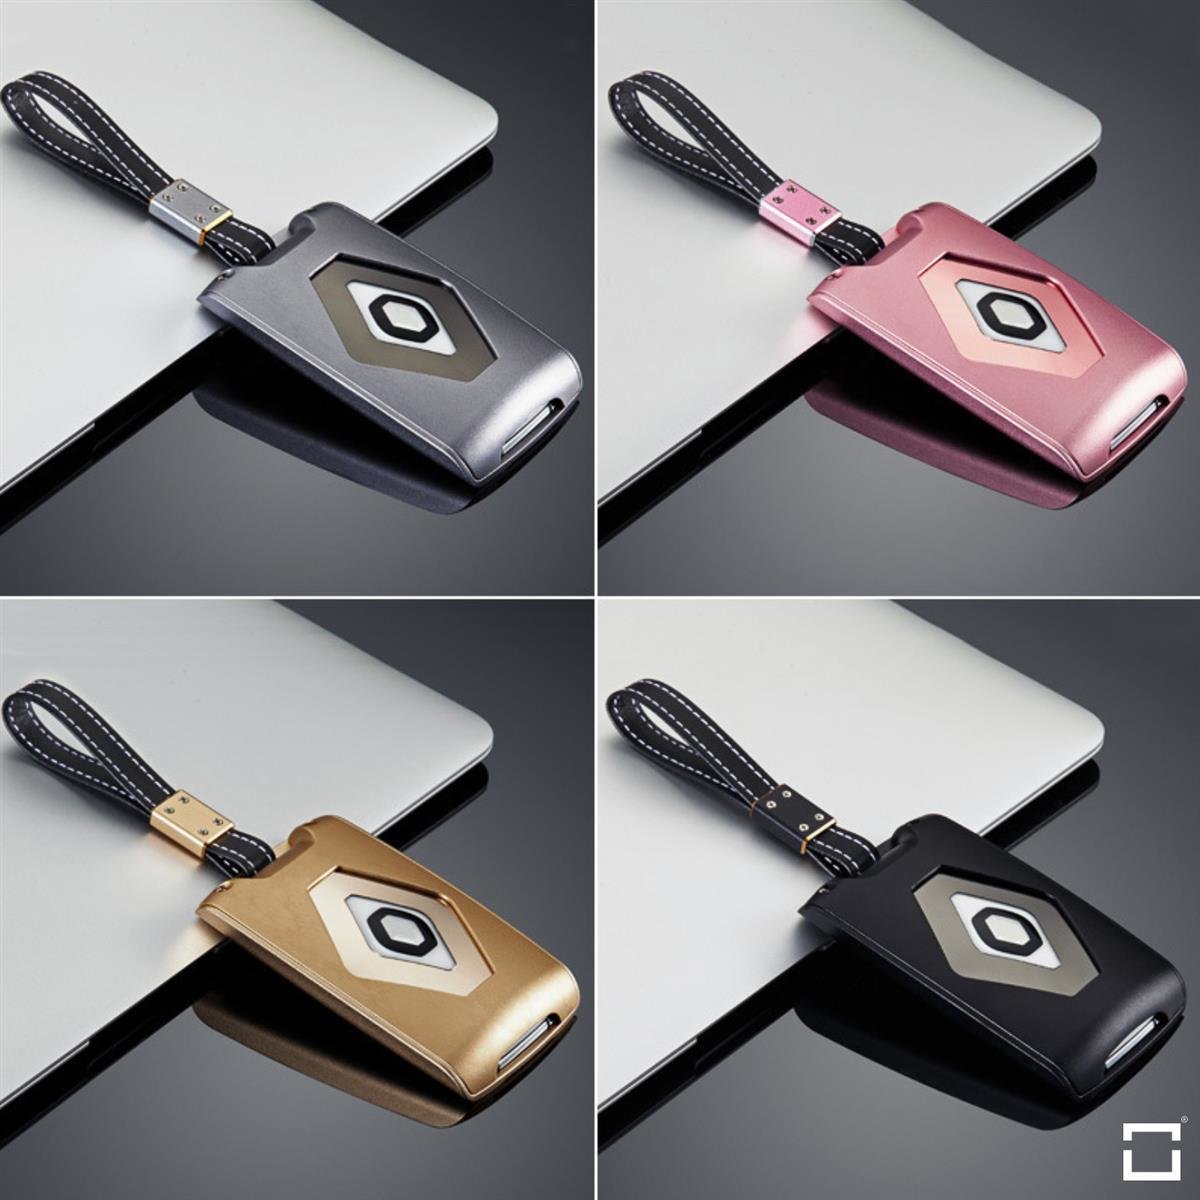 Alu Schlüssel Cover für BMW Schlüssel inkl. Lederband HEK34-B6, 19,95 €